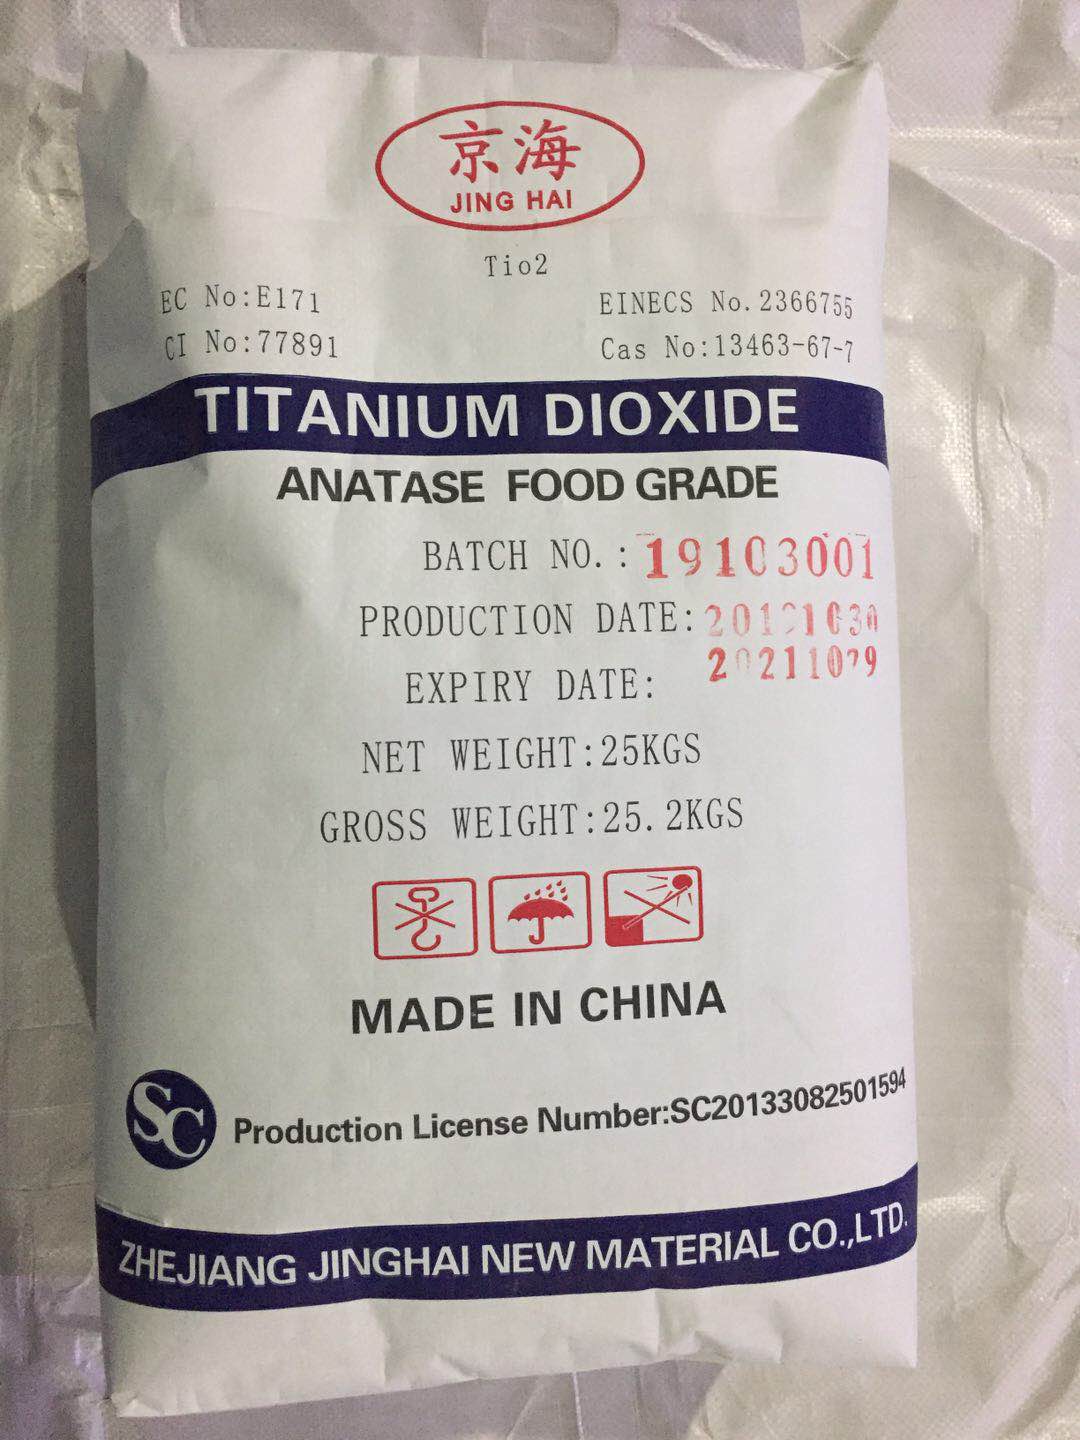 TITANIUM DIOXIDE FOOD GRADE MADE IN CHINA,TITANIUM DIOXIDE PHARMA